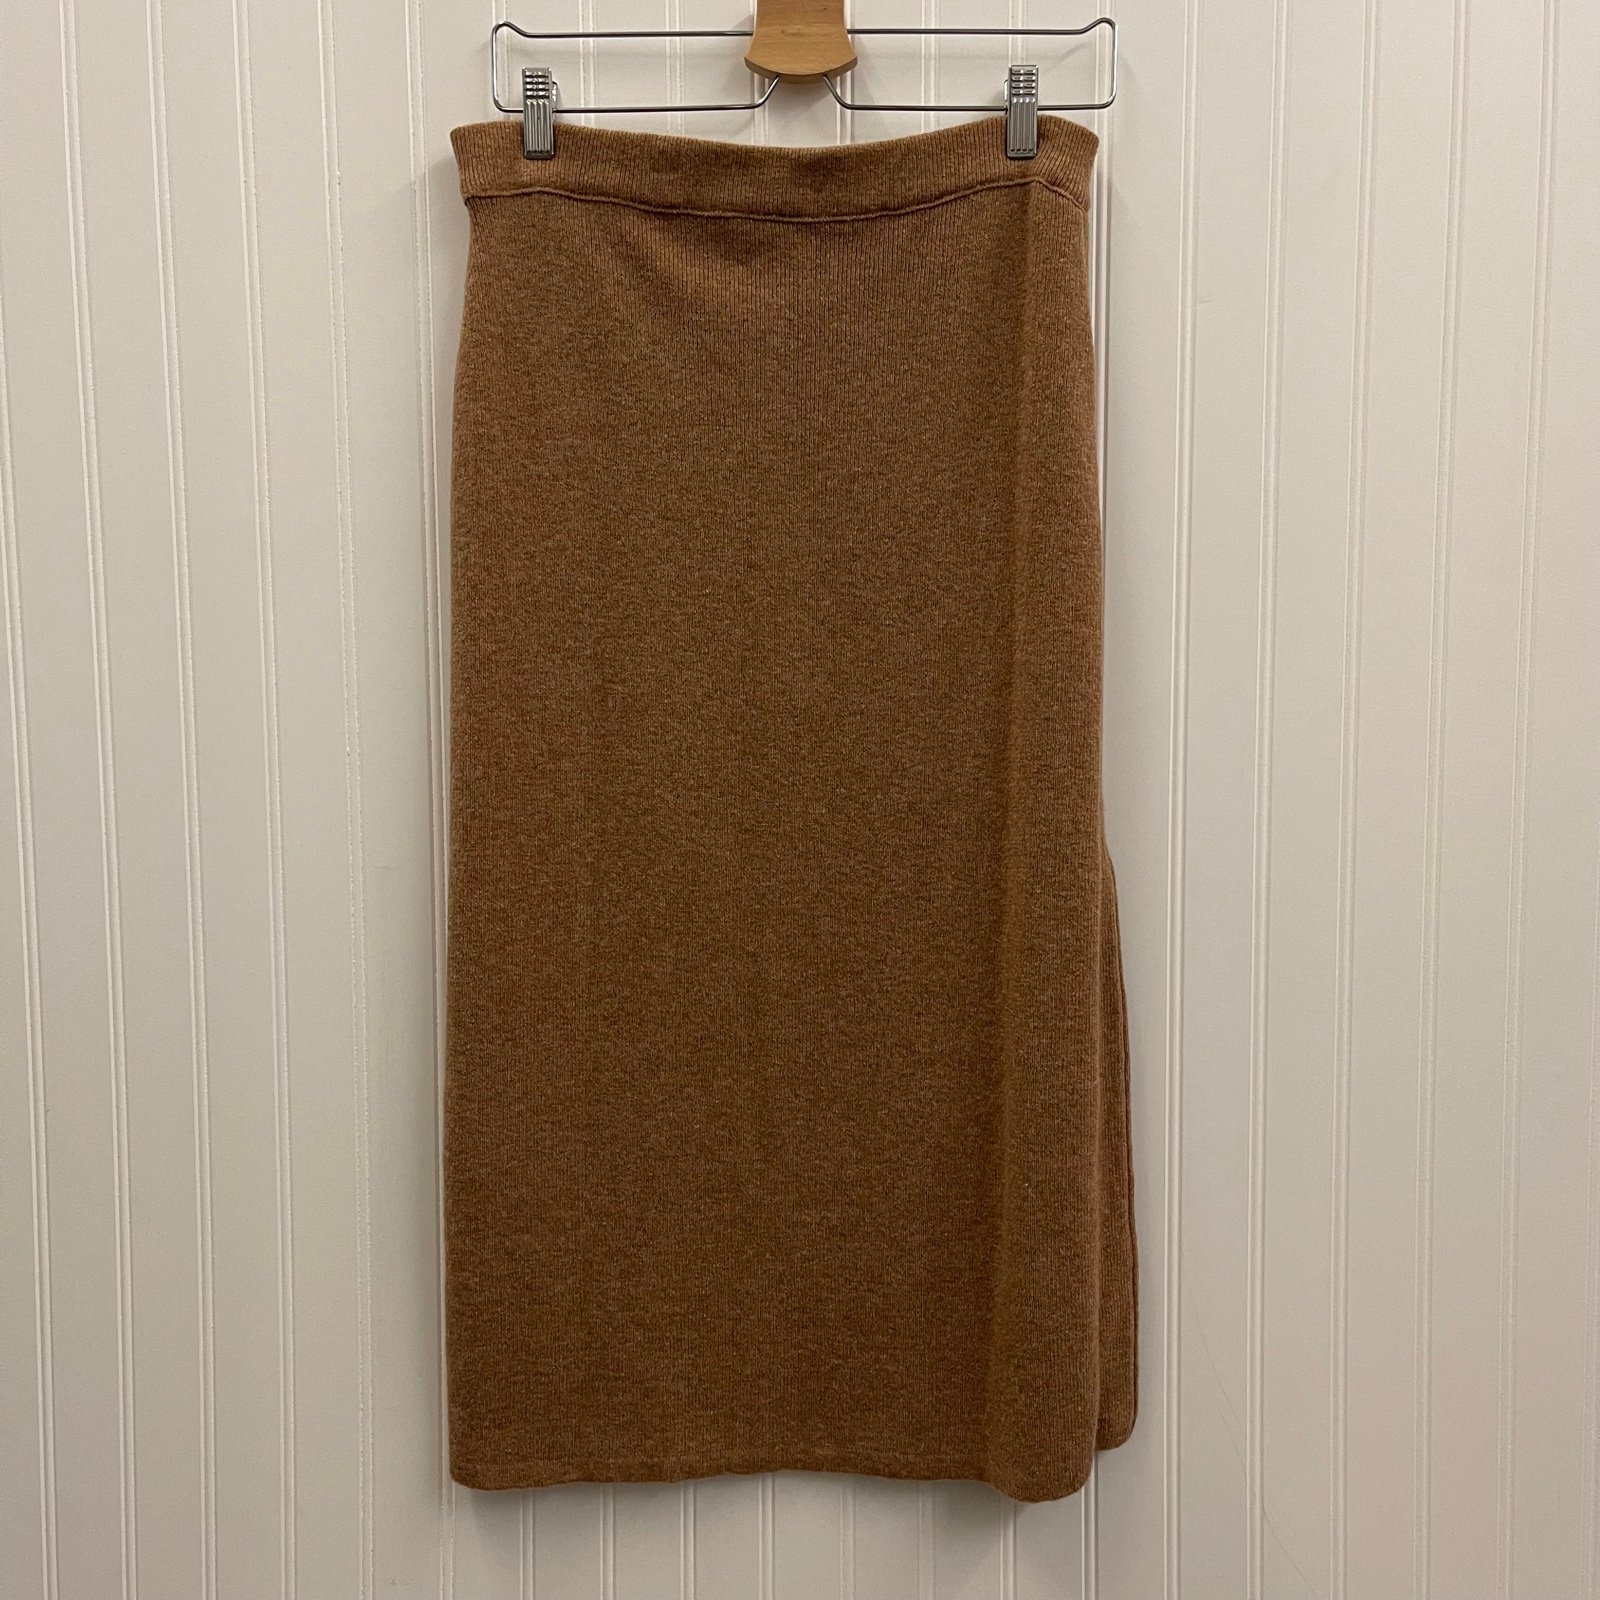 floor price Vintage Tan Lambswool & Cashmere Blend Midi Skirt Sz 6 loh0QyrWU US Sale